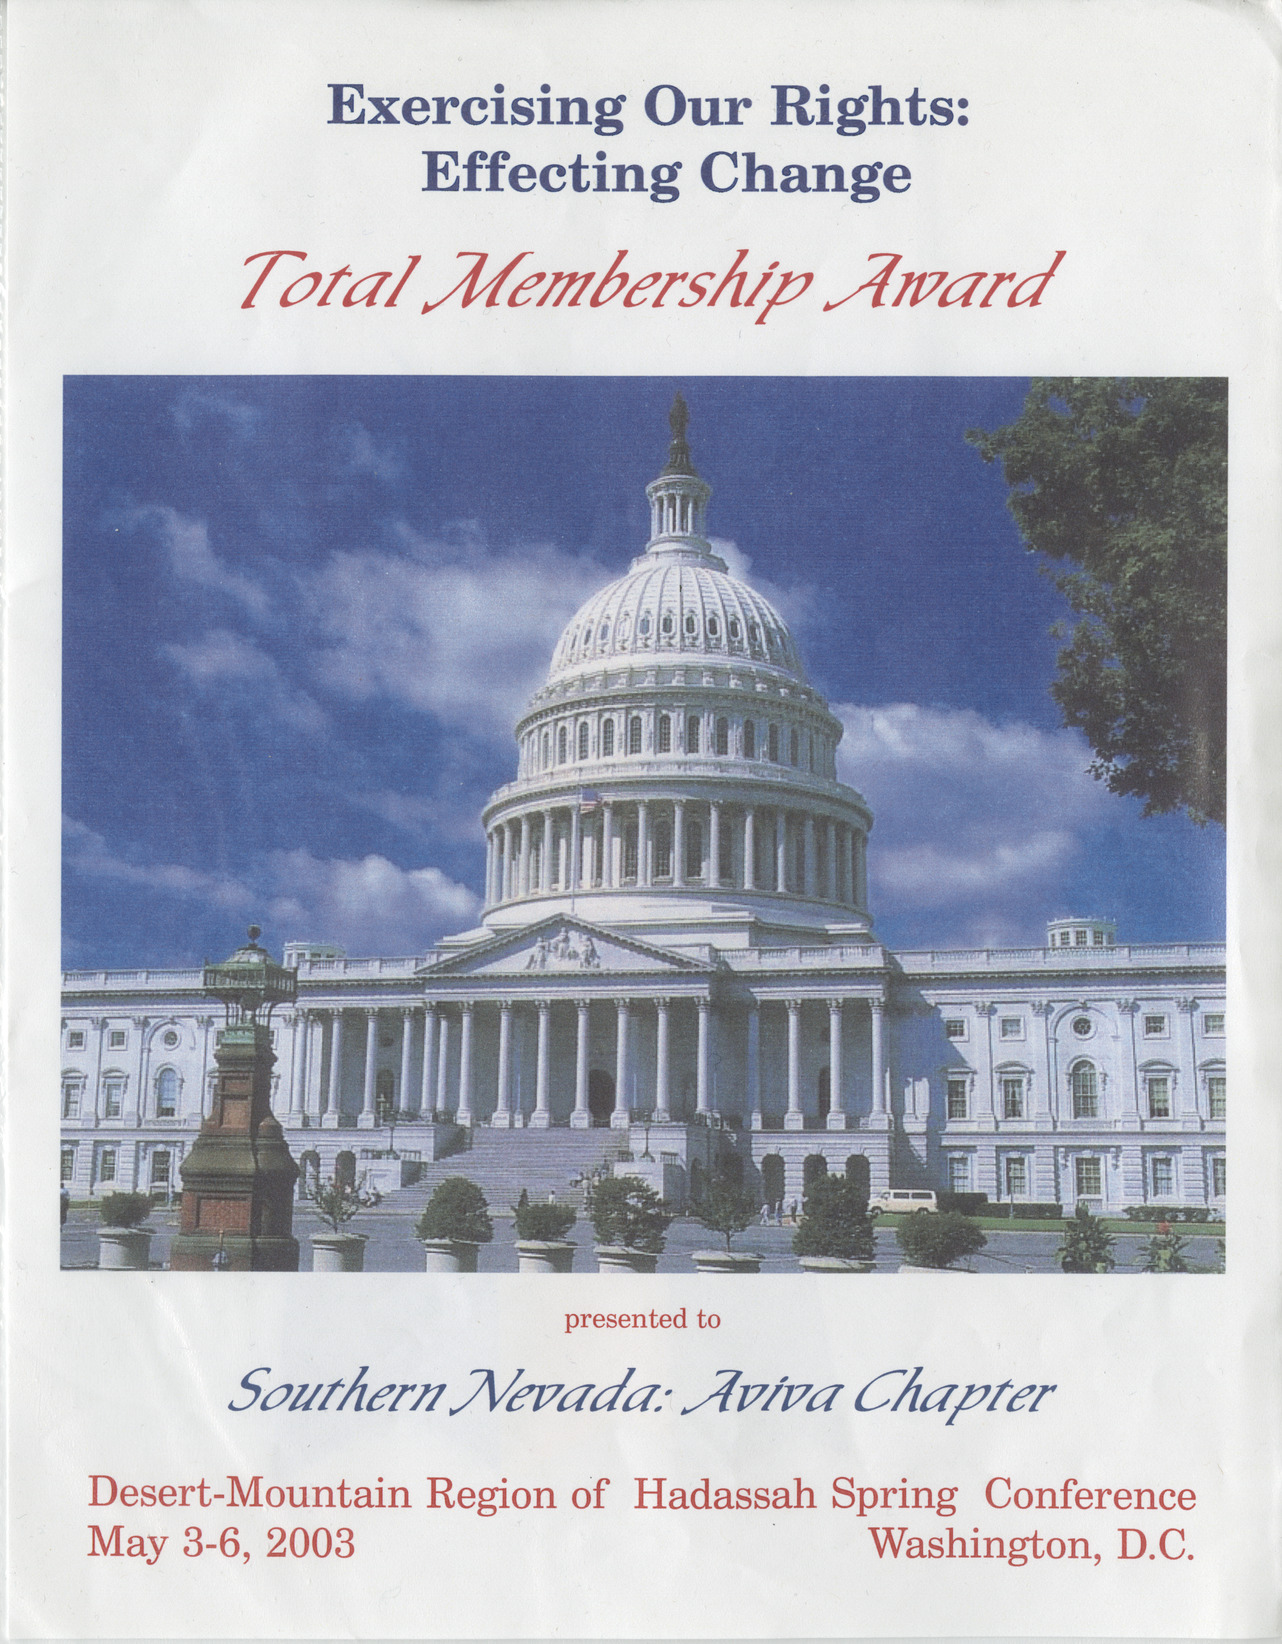 Total Membership award for Southern Nevada Aviva Chapter, May 2003